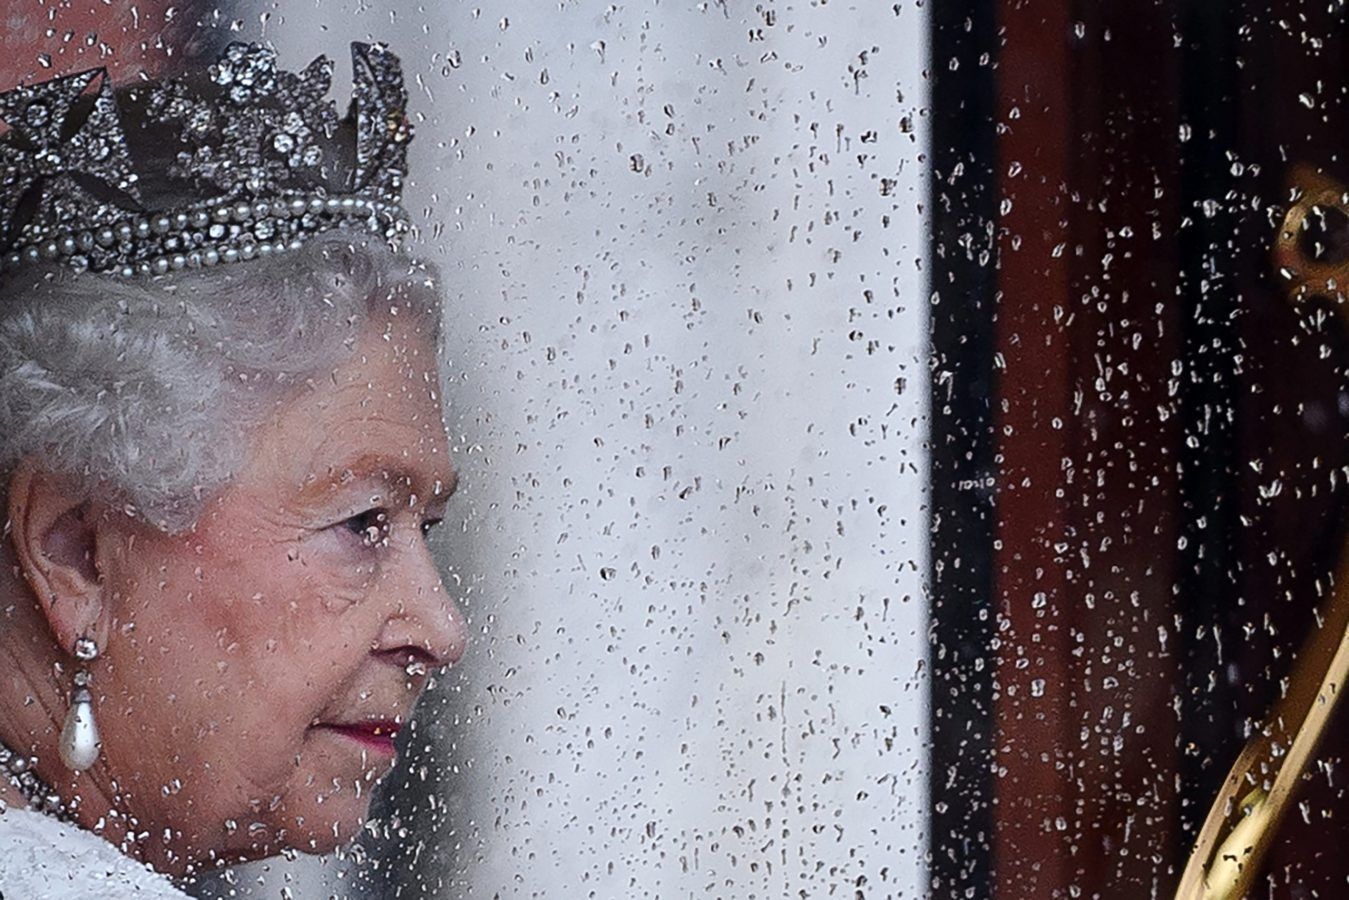 Queen Elizabeth II, Britain’s longest-serving monarch, dies at 96